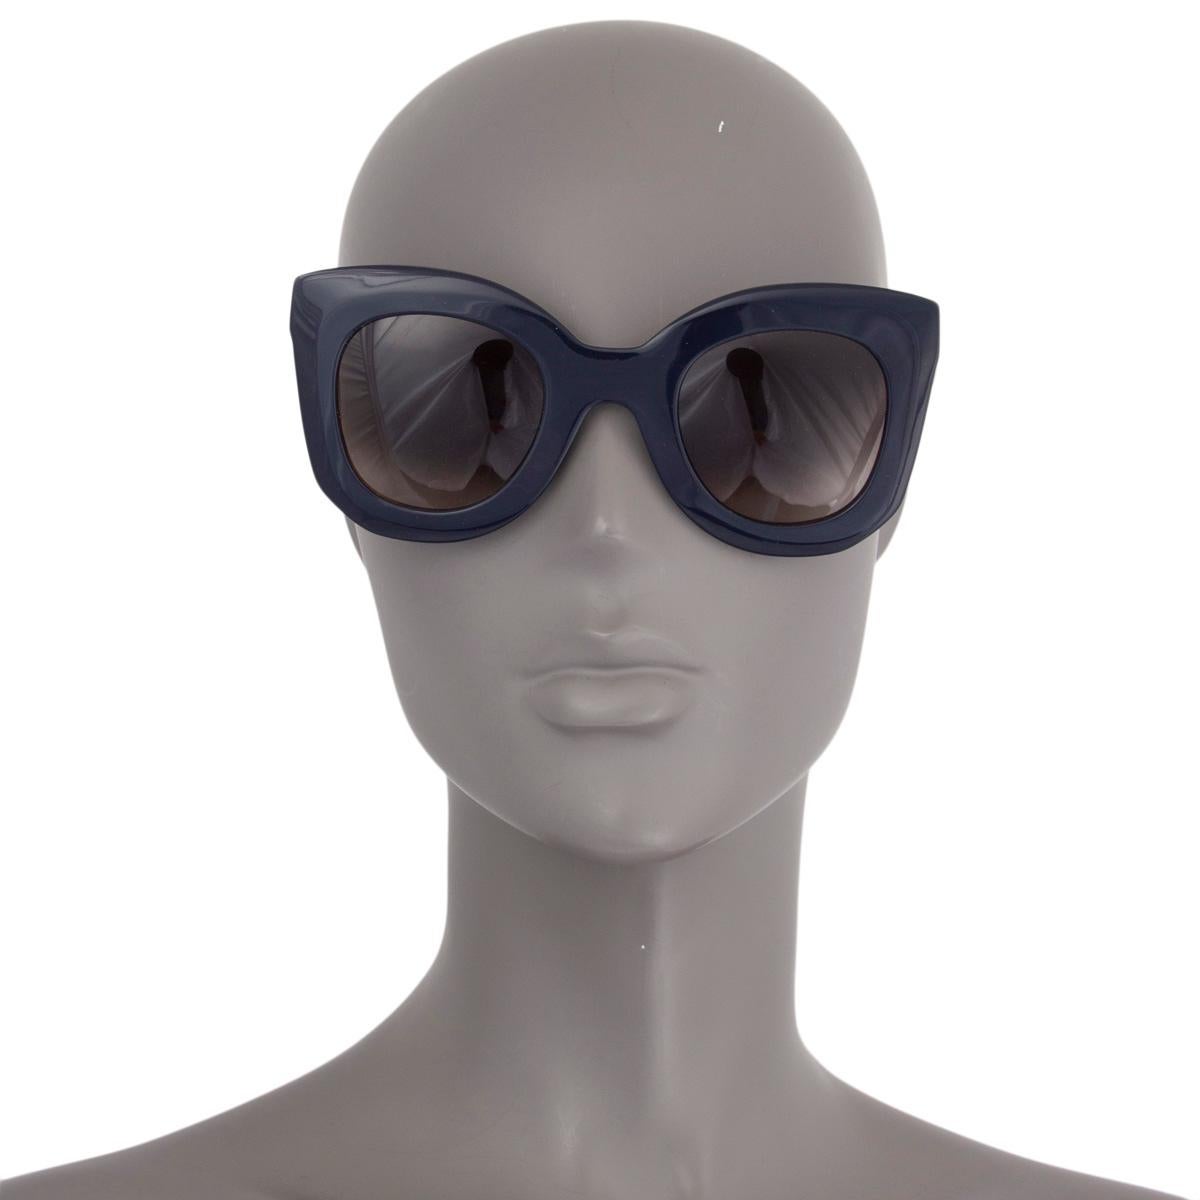 marta always bought designer sunglasses